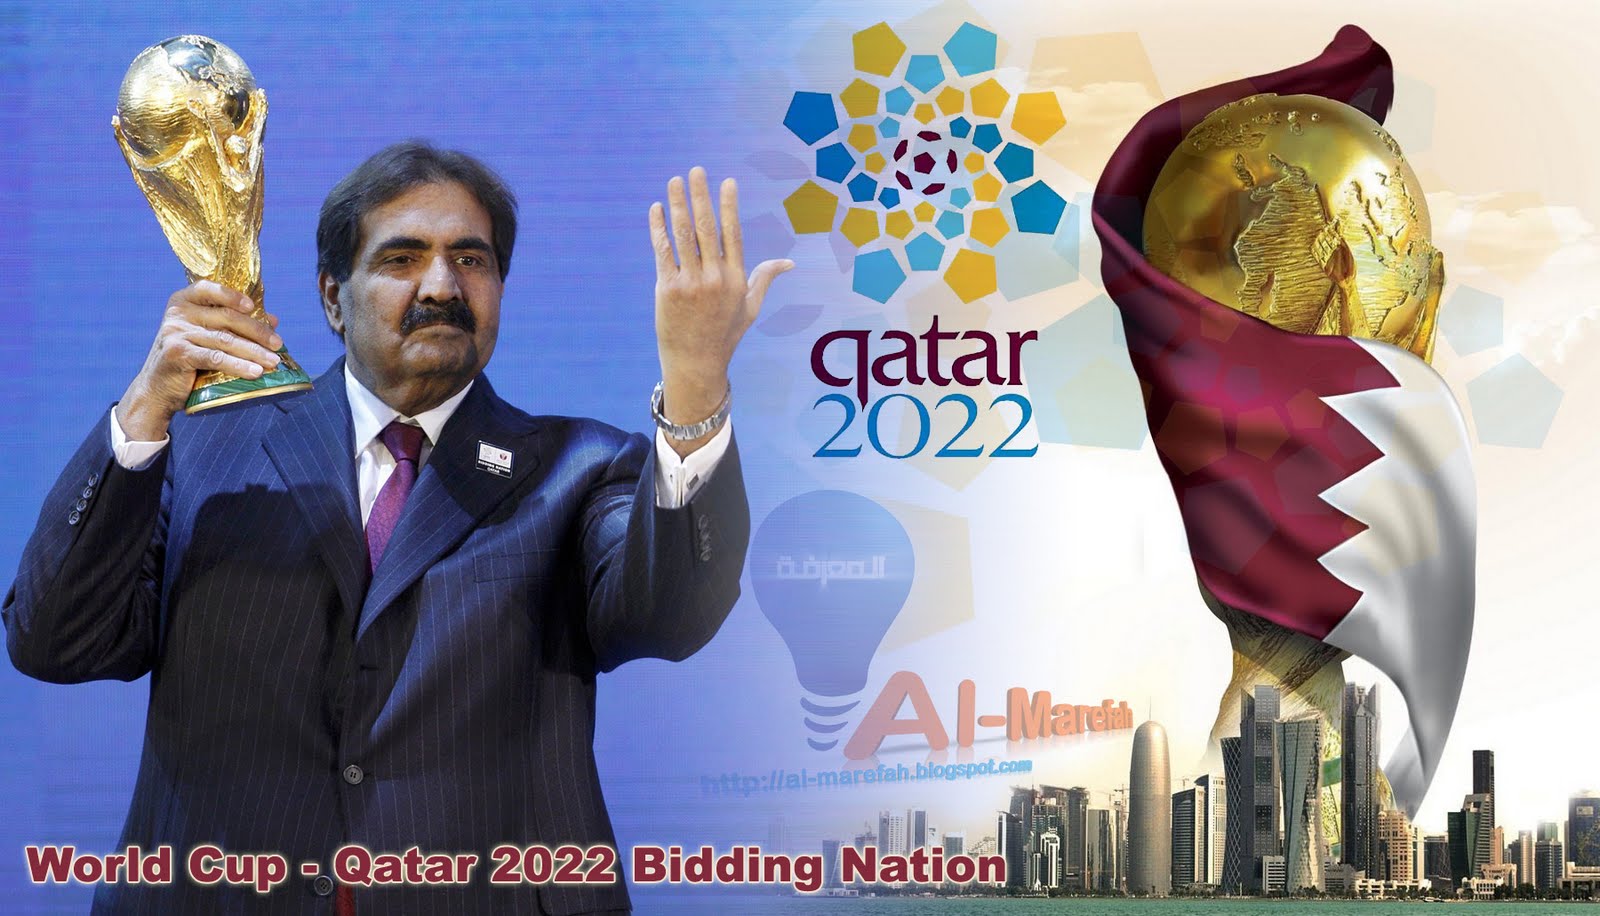 World Cup - Qatar 2022 Bidding Nation